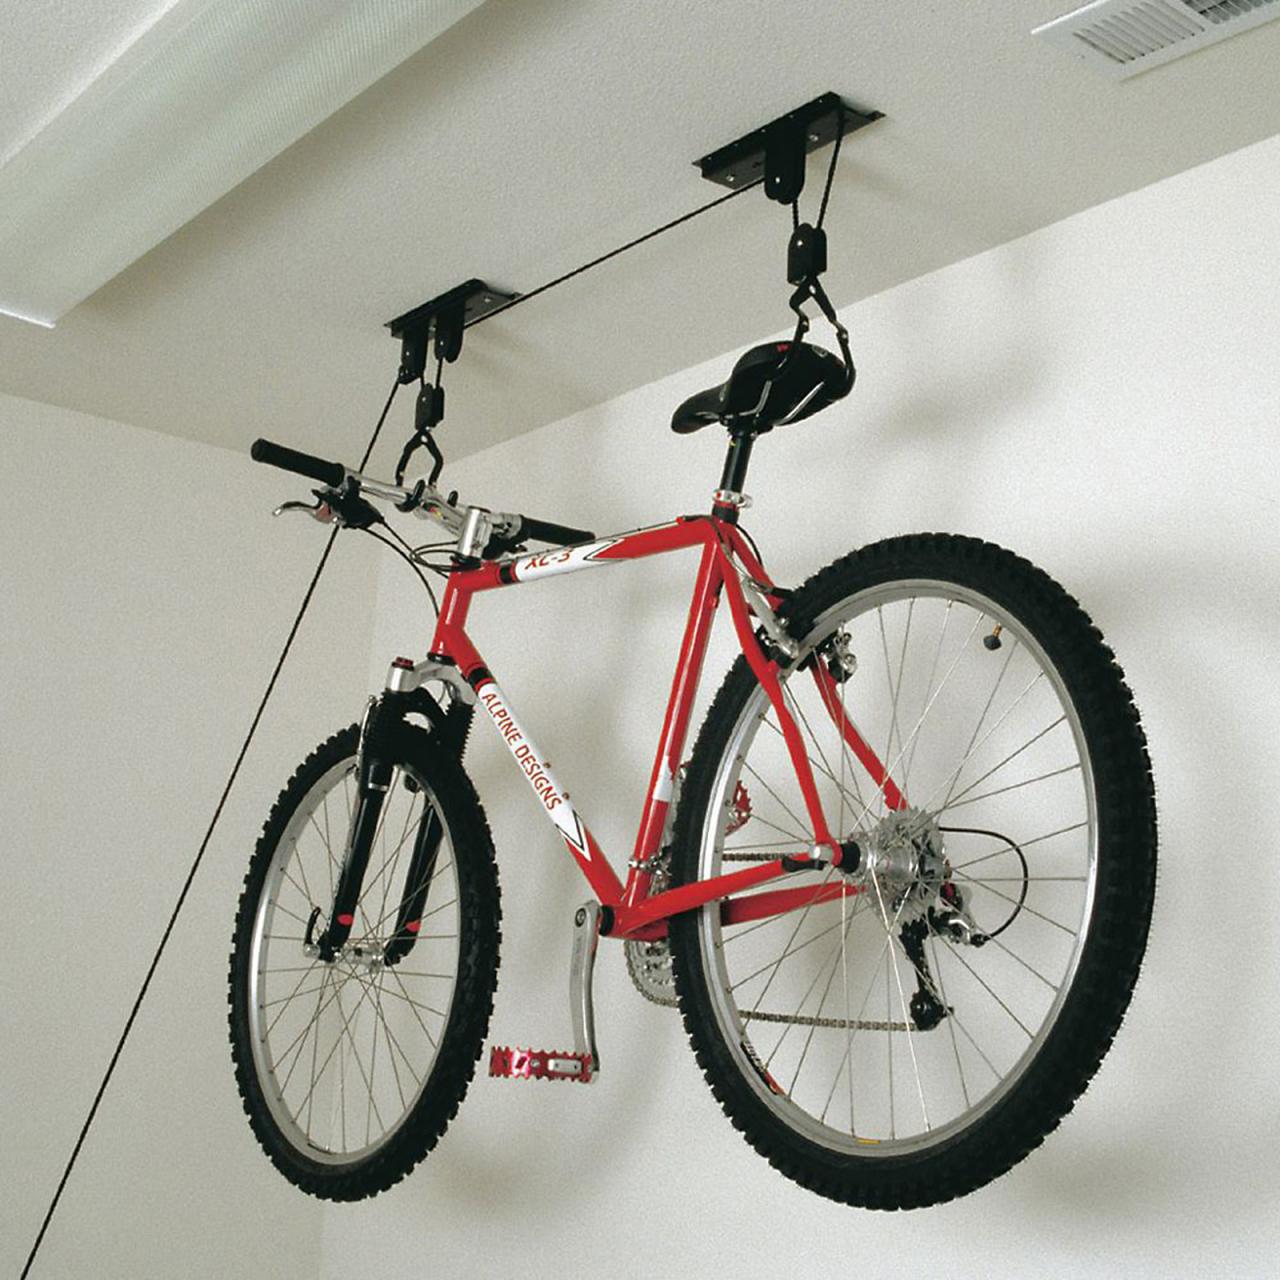 Racor Pro Ceiling Mount Bike Rack